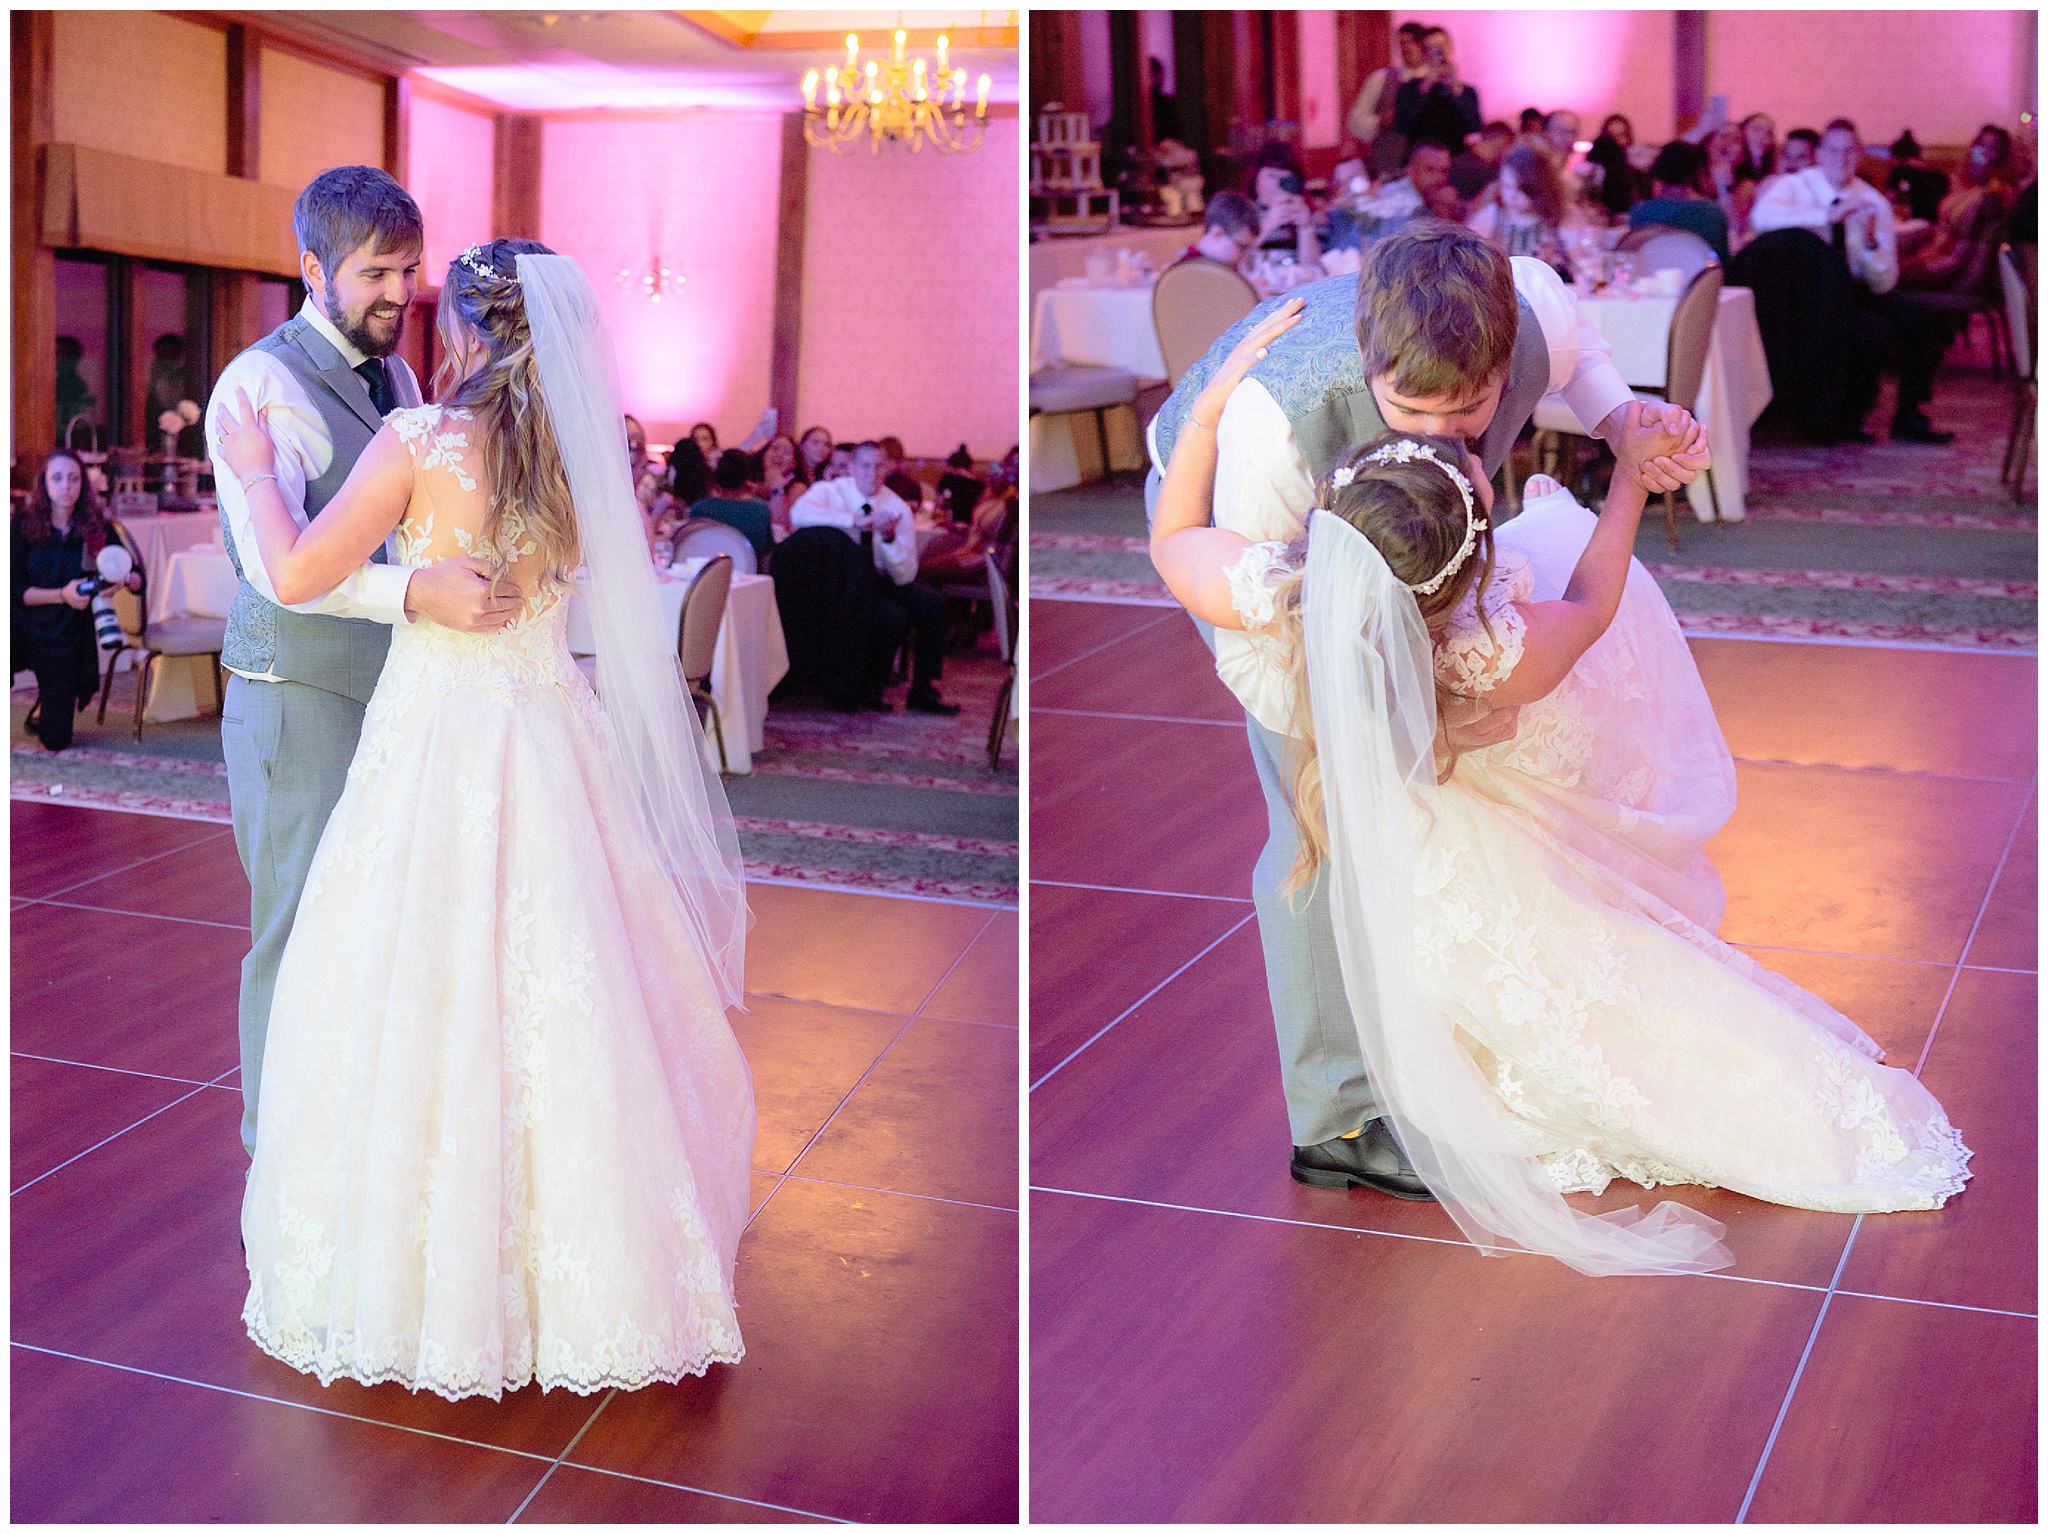 Groom dips his bride during their first dance at Oglebay